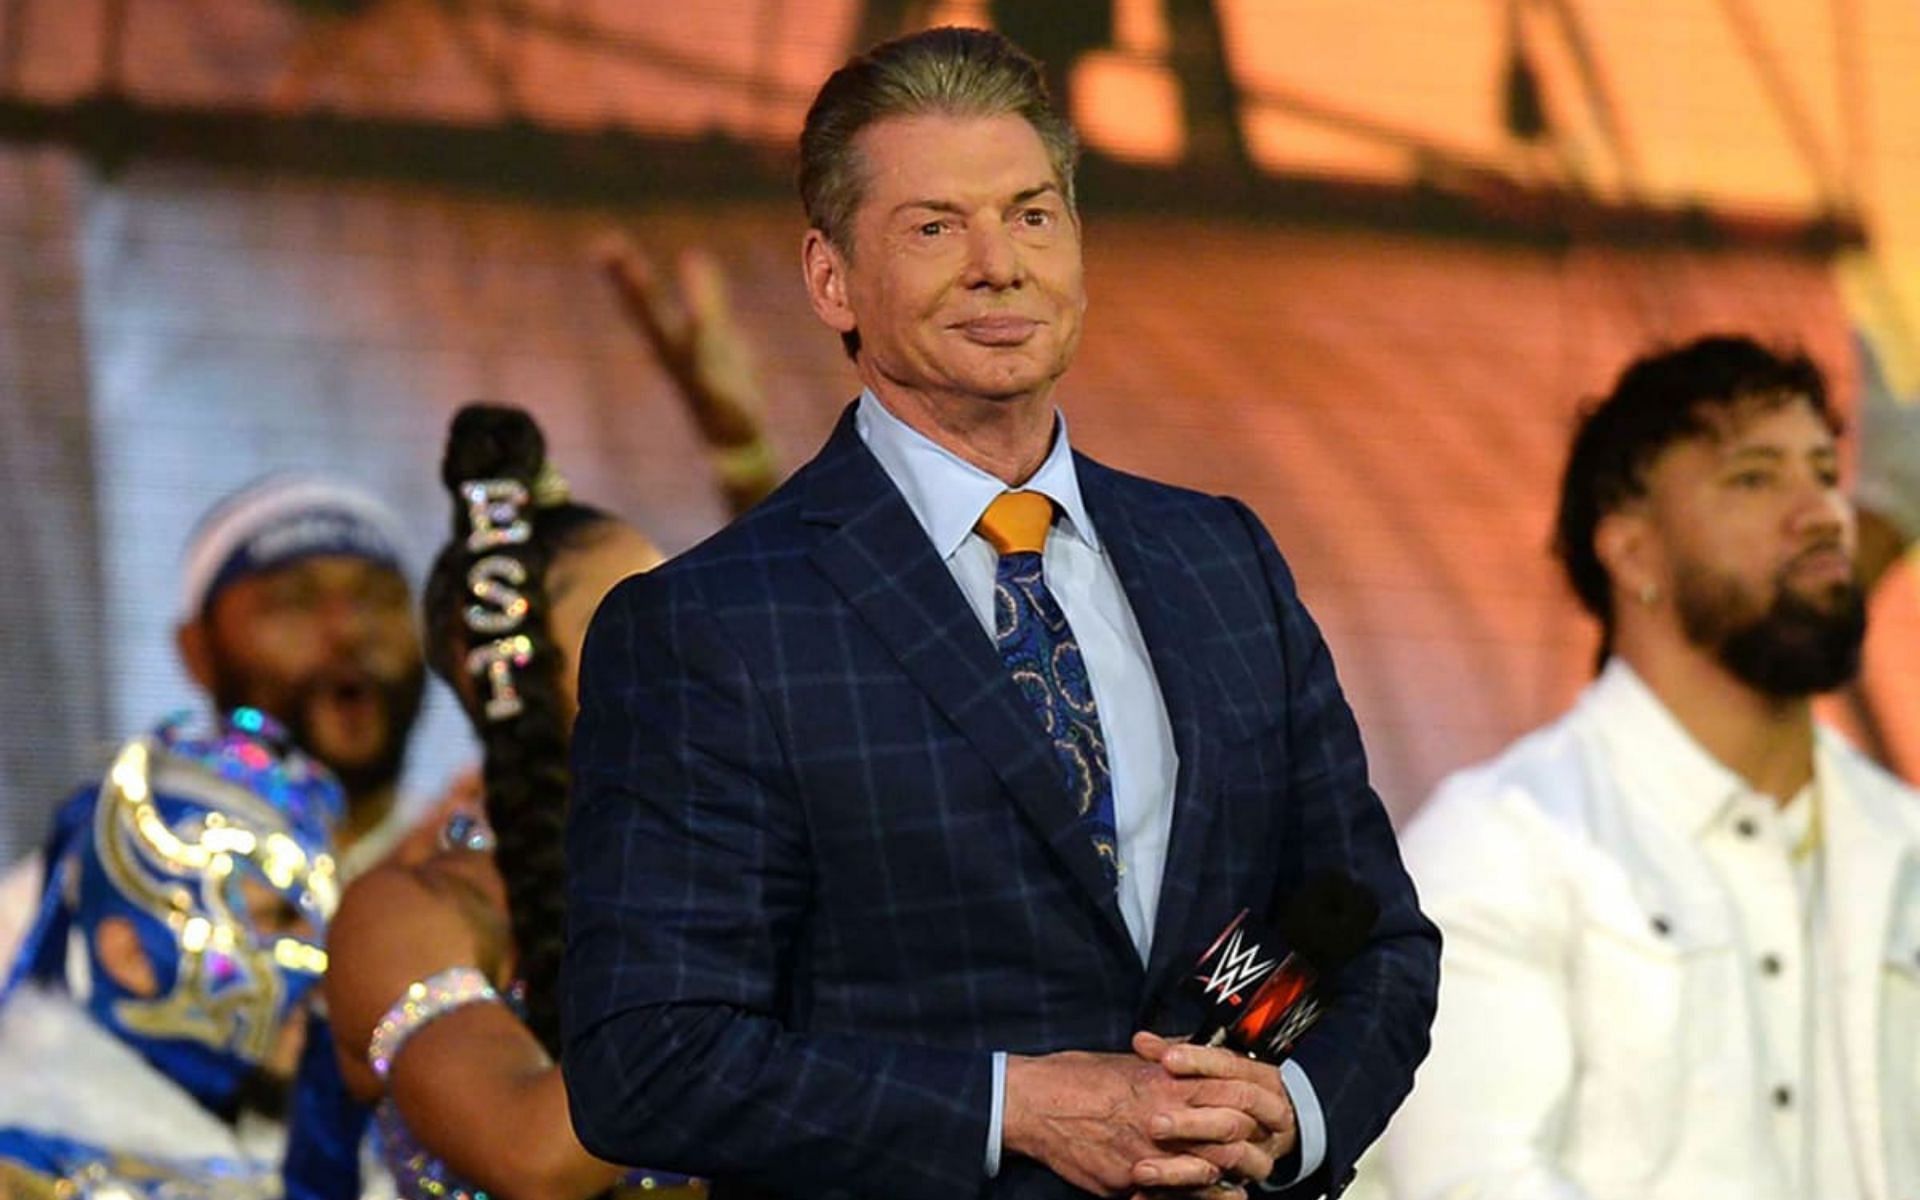 Vince McMahon and his bizarre backstage antics.